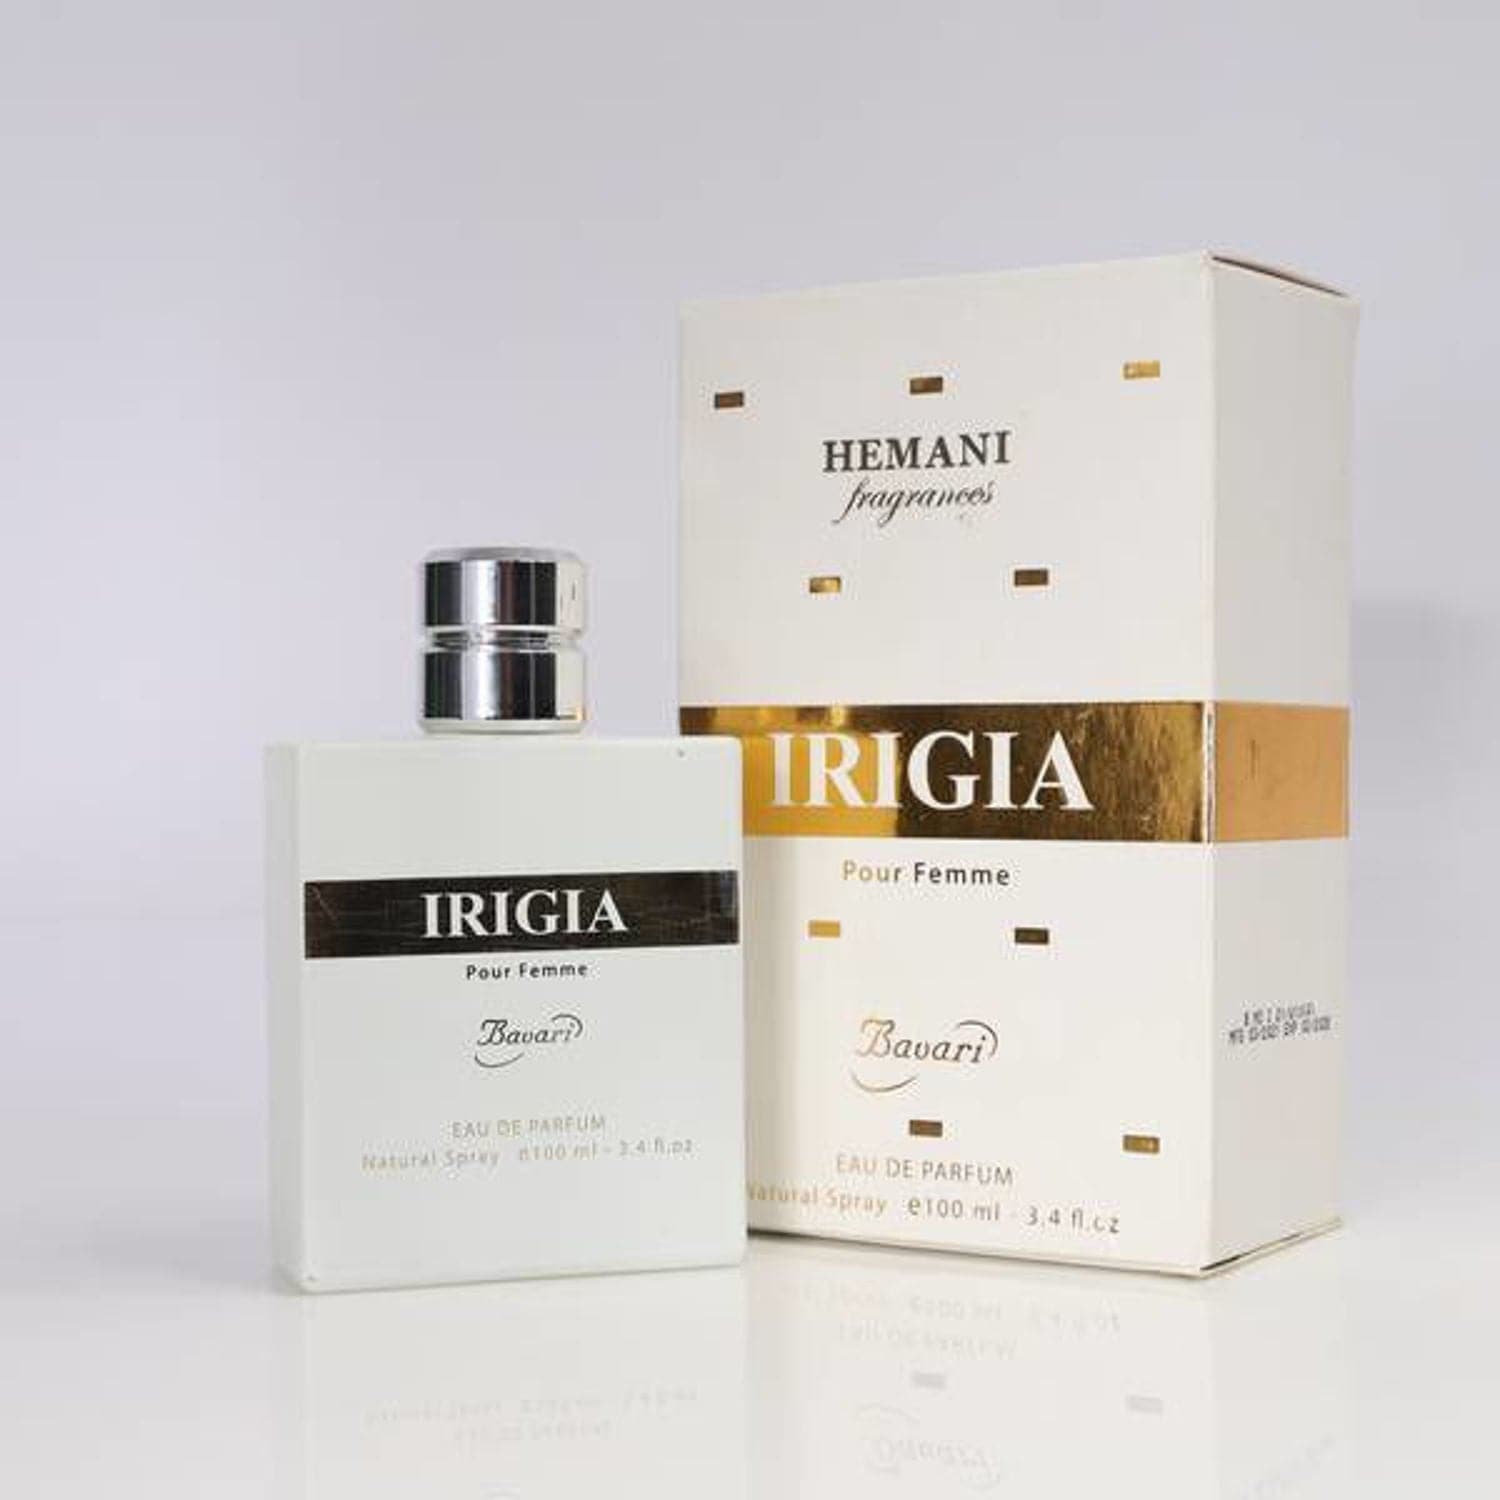 Hemani Irigia Perfume 100Ml - Premium Perfume & Cologne from Hemani - Just Rs 900! Shop now at Cozmetica